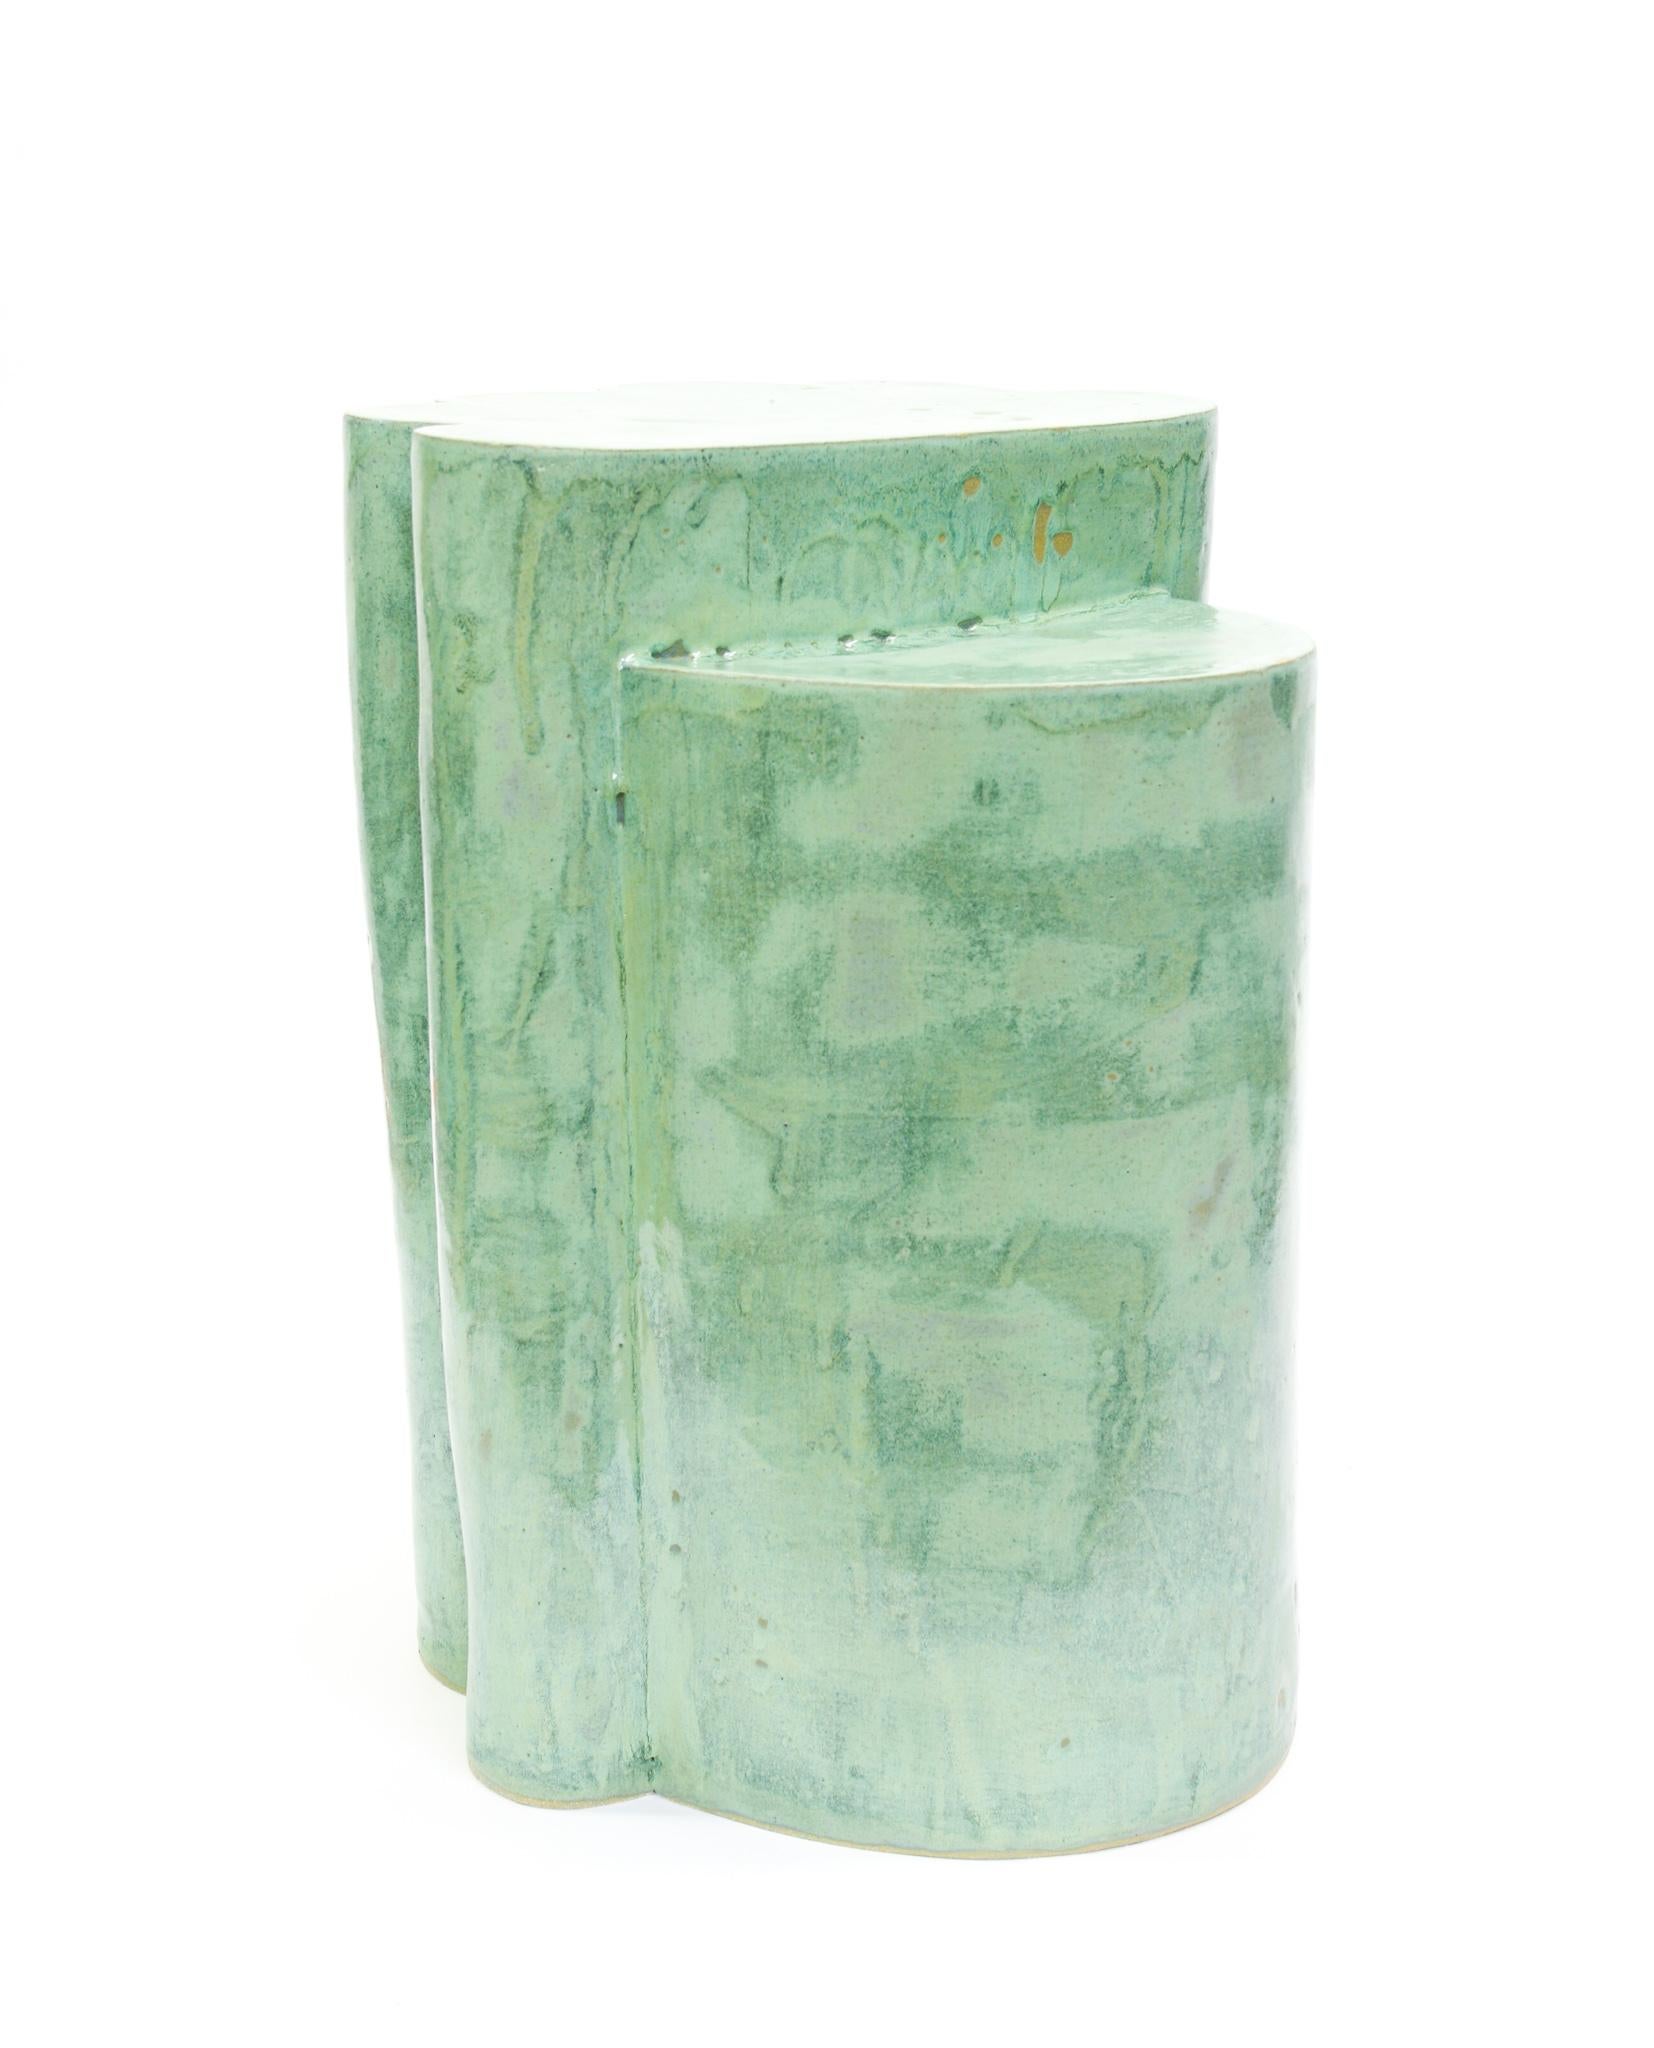 Modern Ceramic Ledge Side Table & Stool in Jade by BZIPPY For Sale